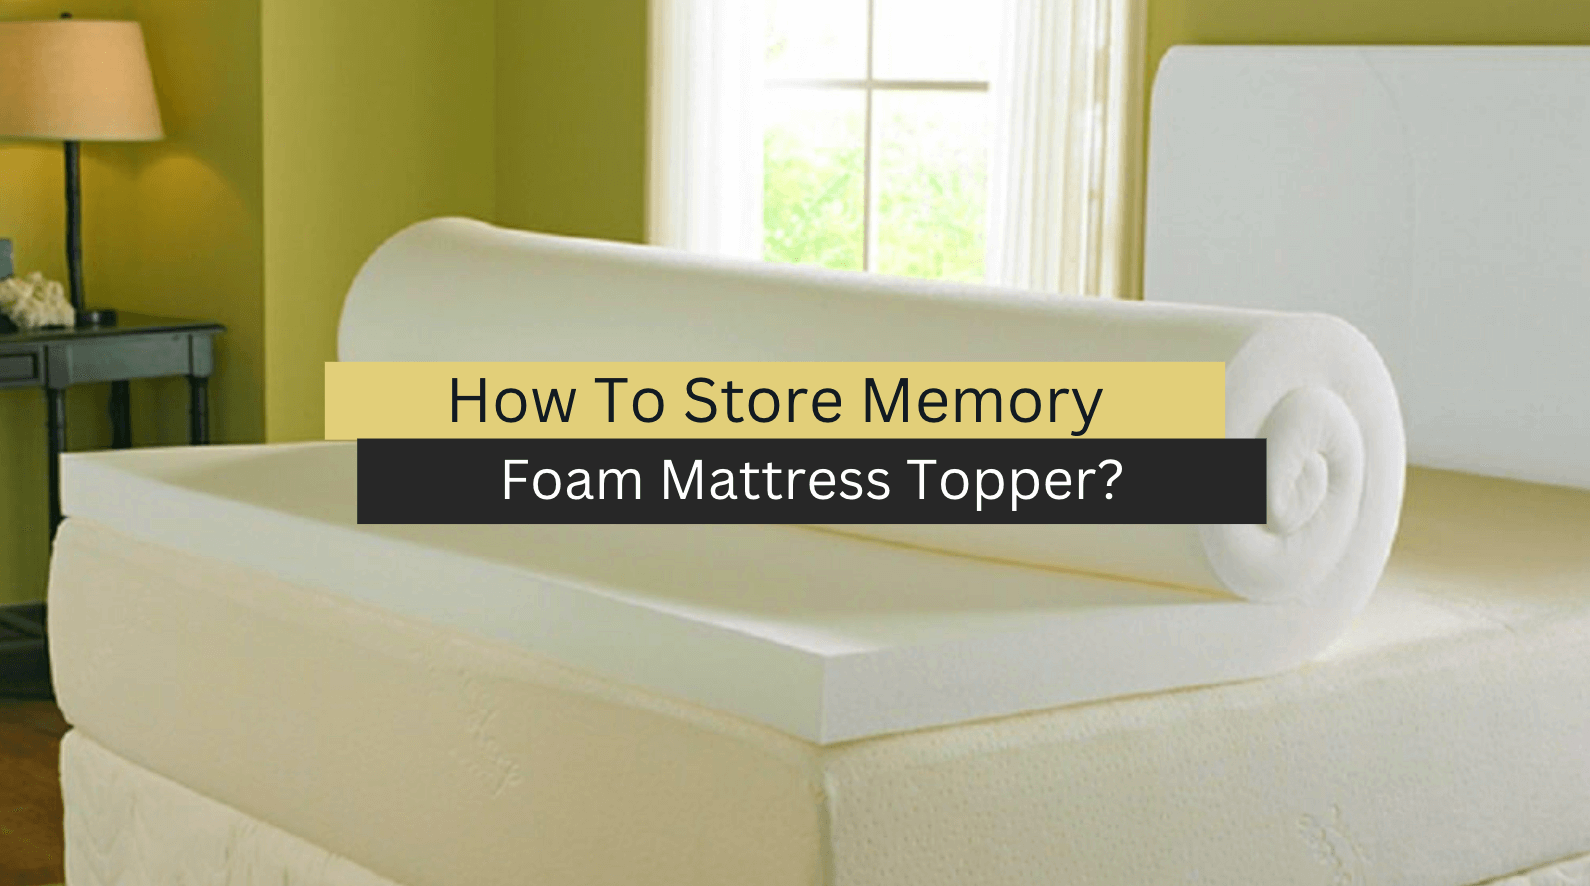 How To Store Memory Foam Mattress Topper?